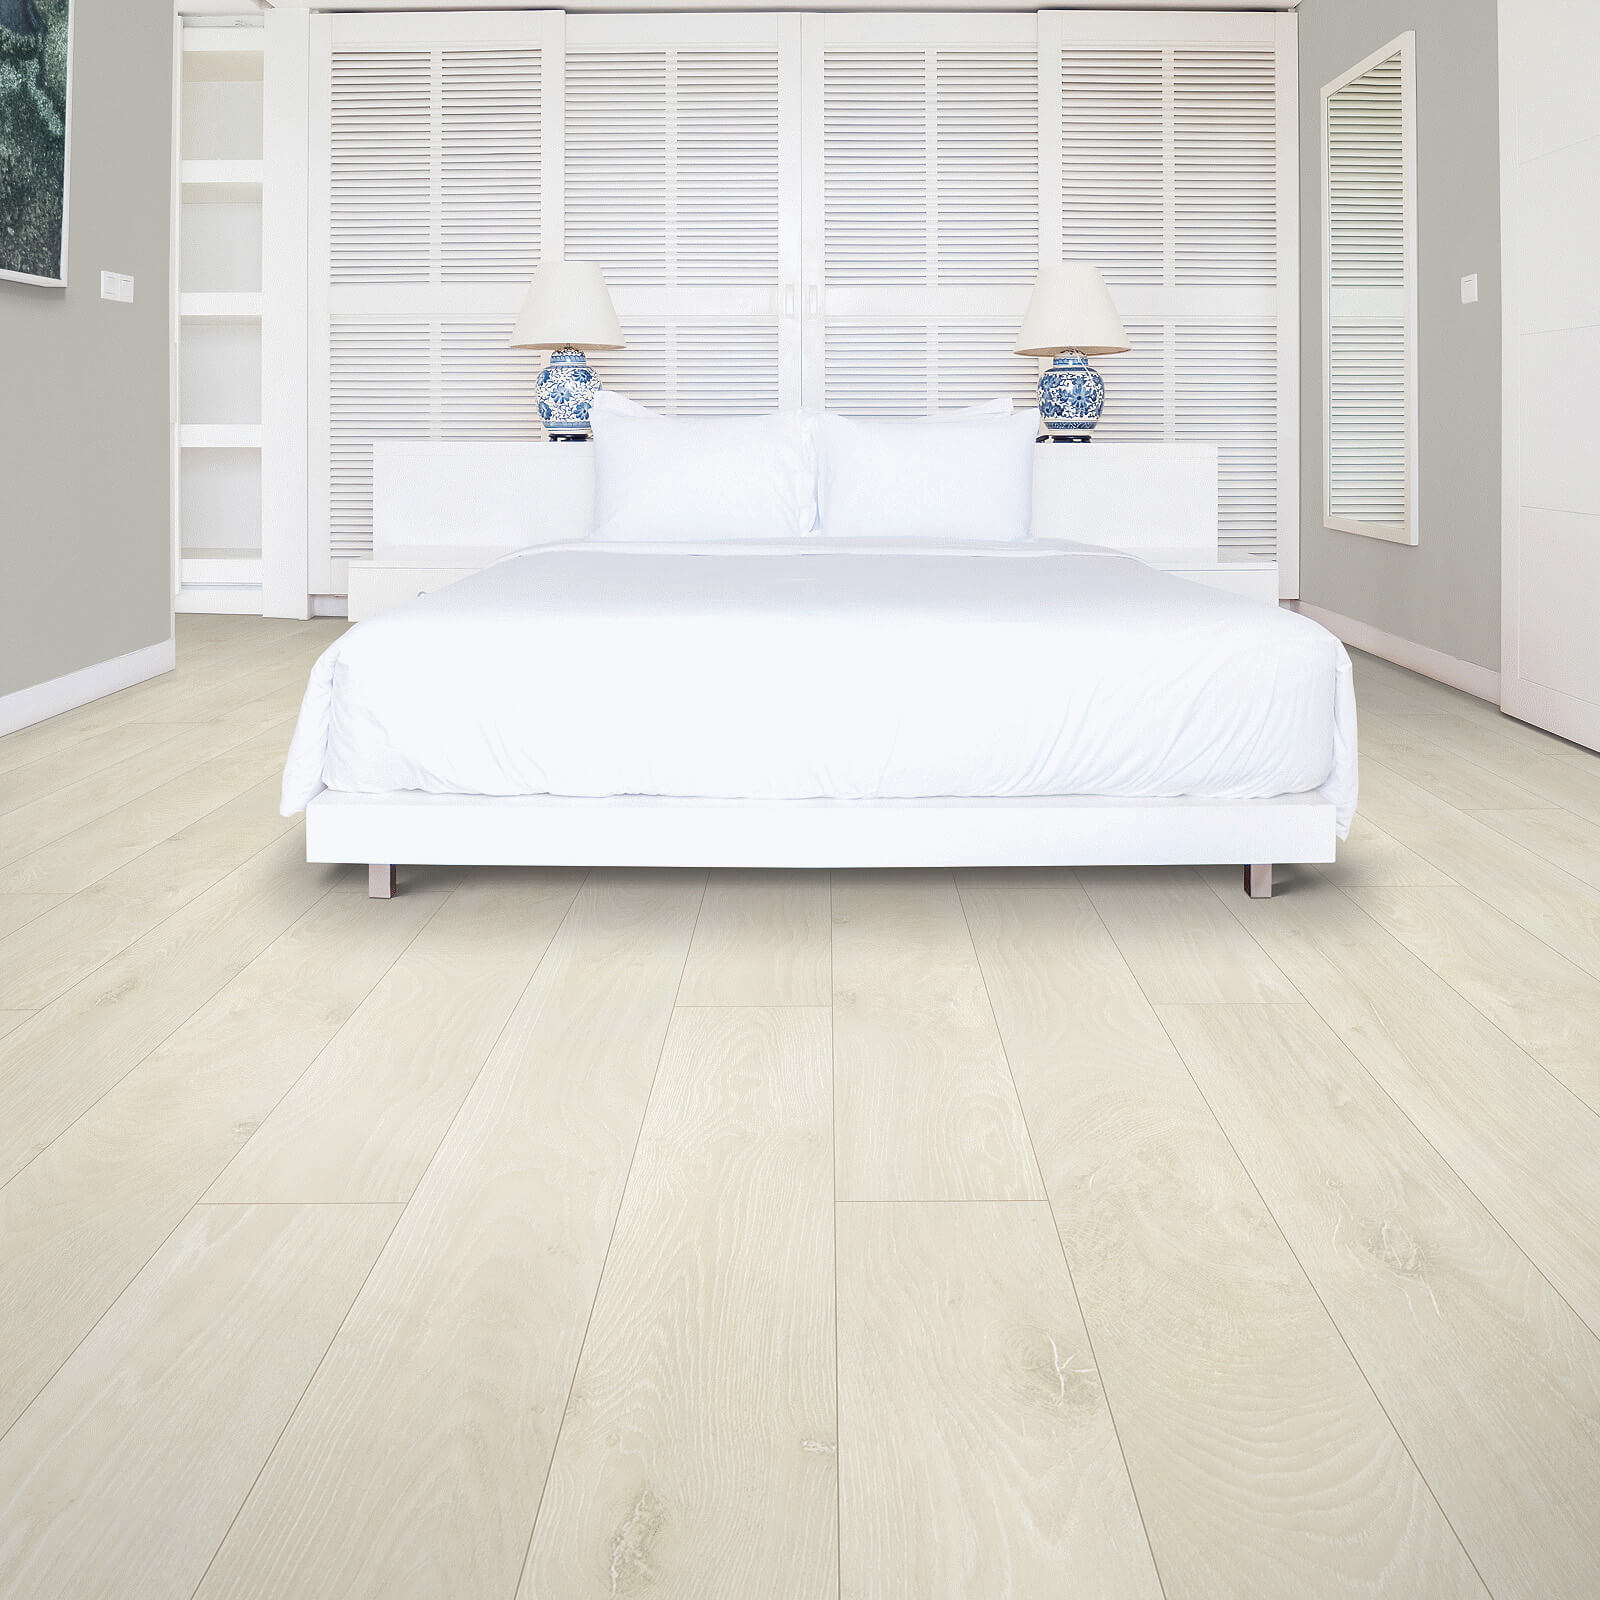 Laminate flooring in bedroom | Dehart Tile